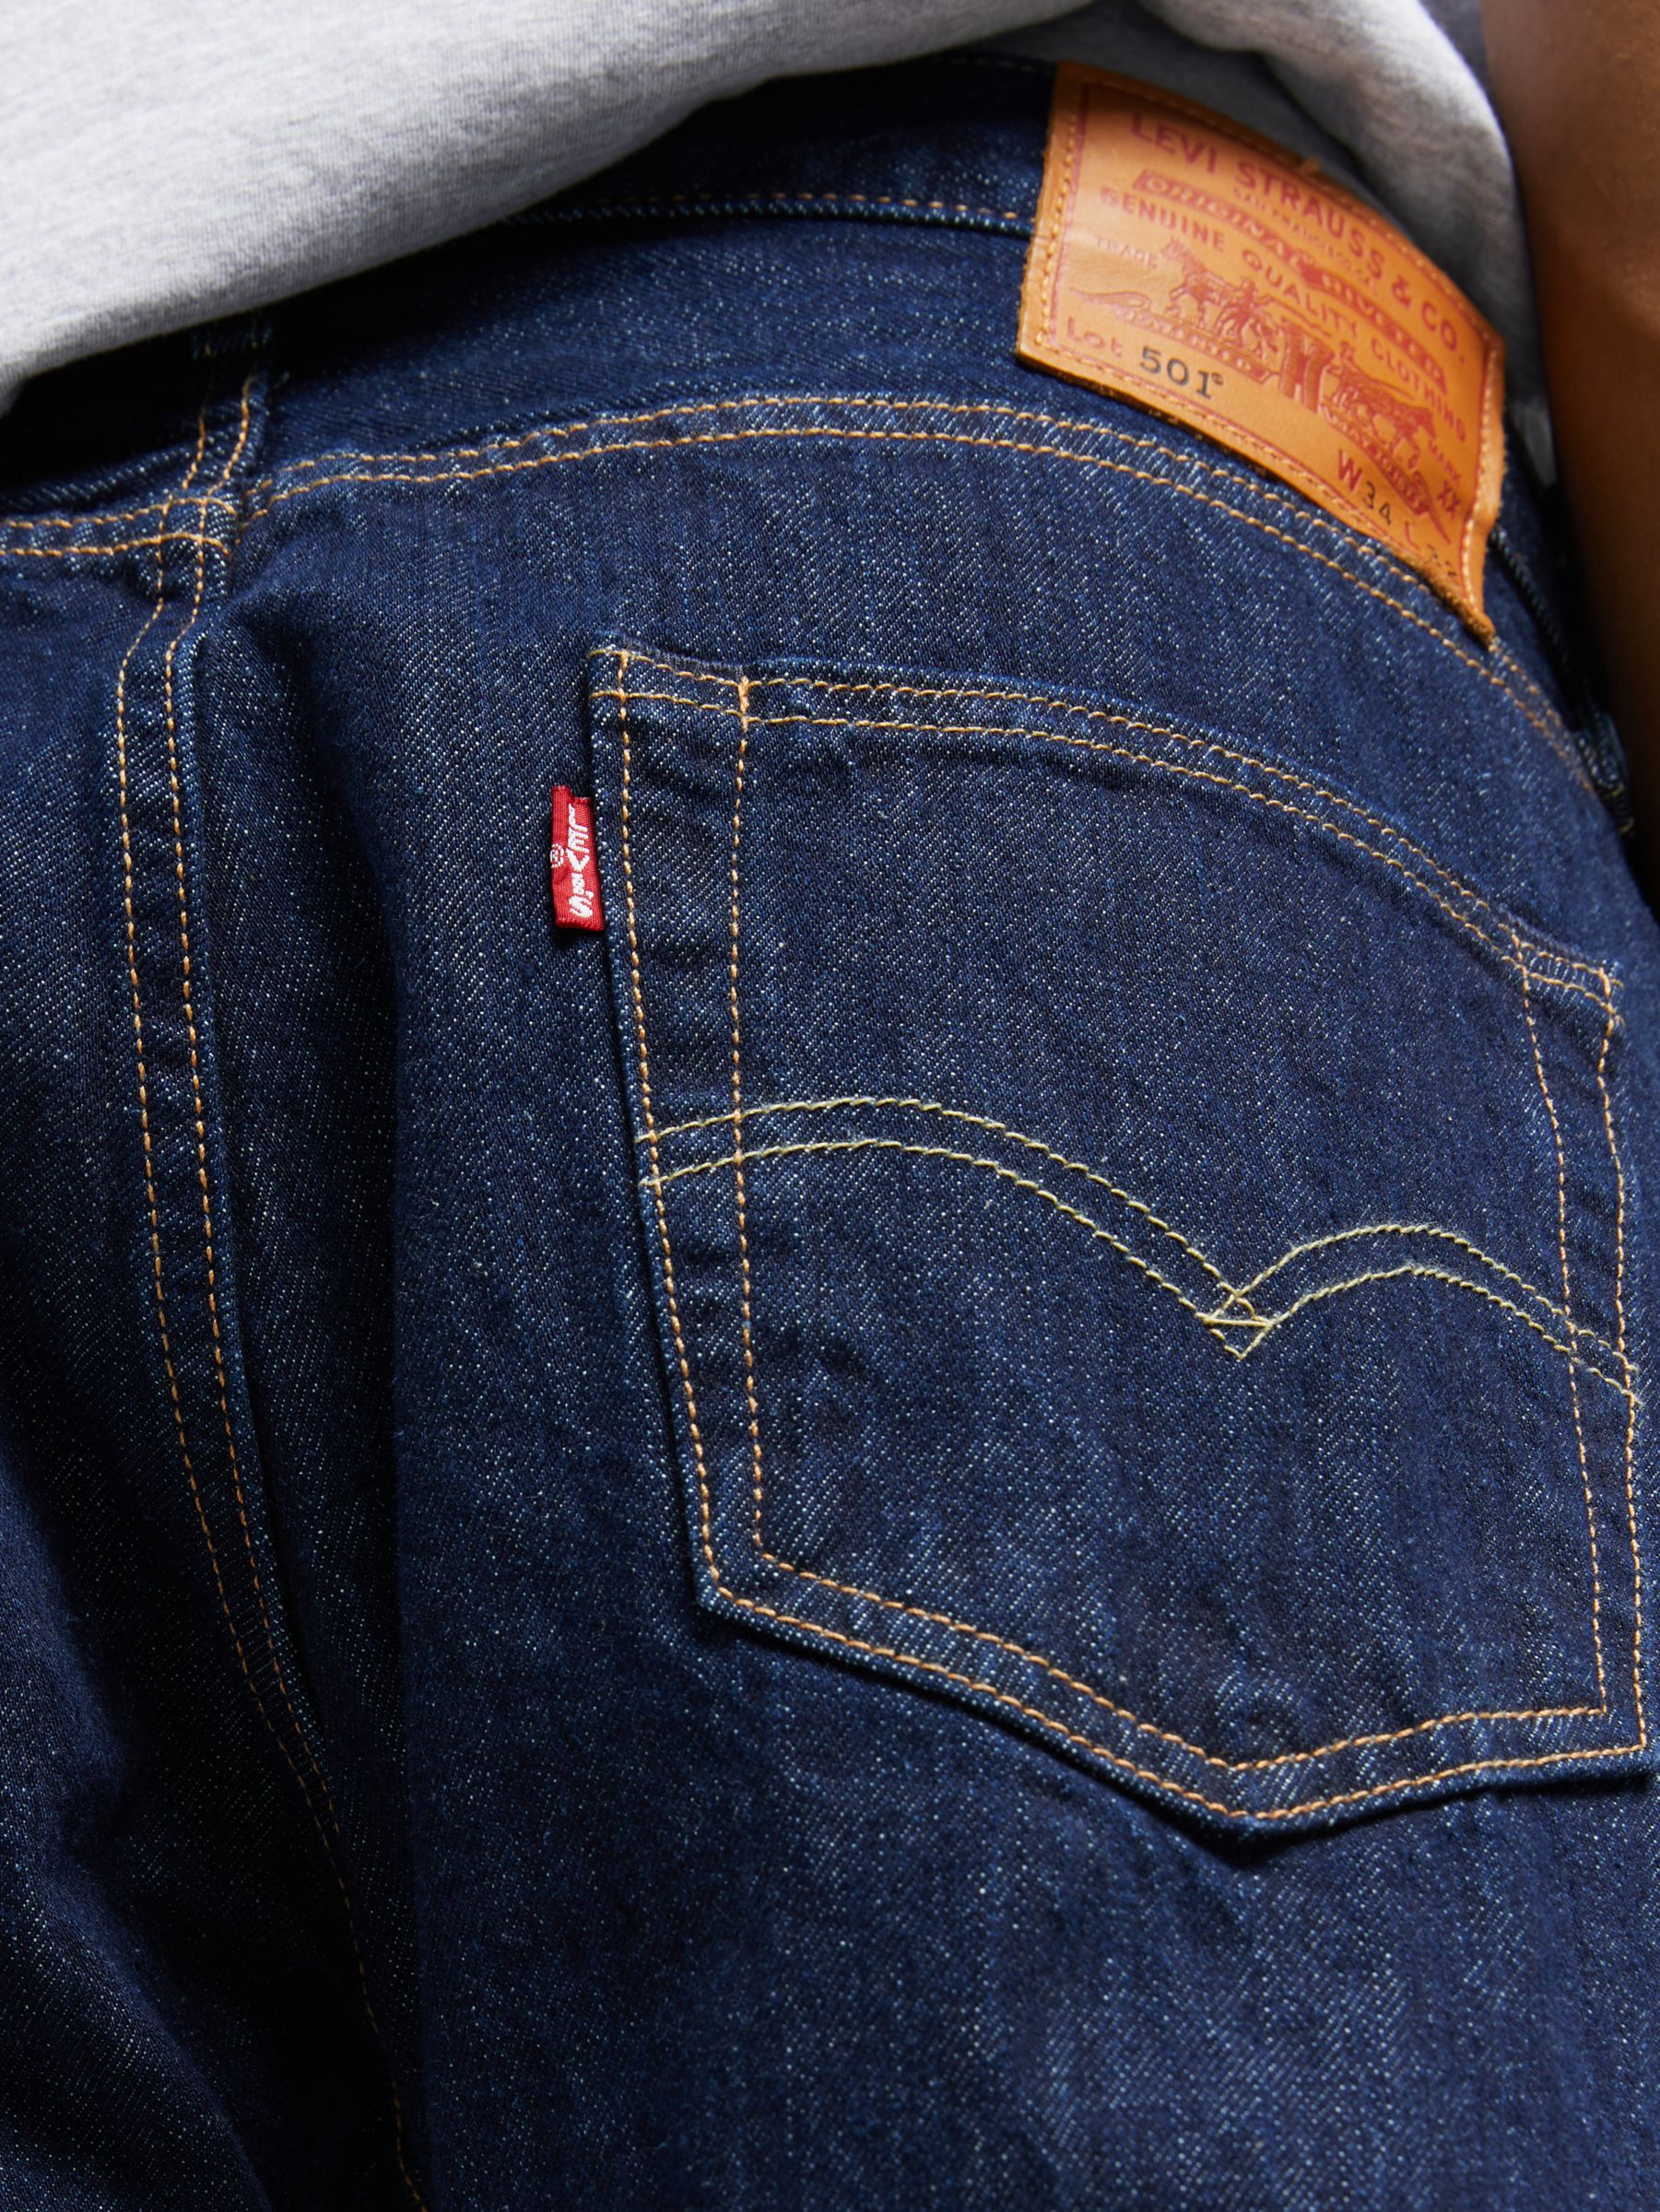 Buy Women's Original Straight Jeans Online